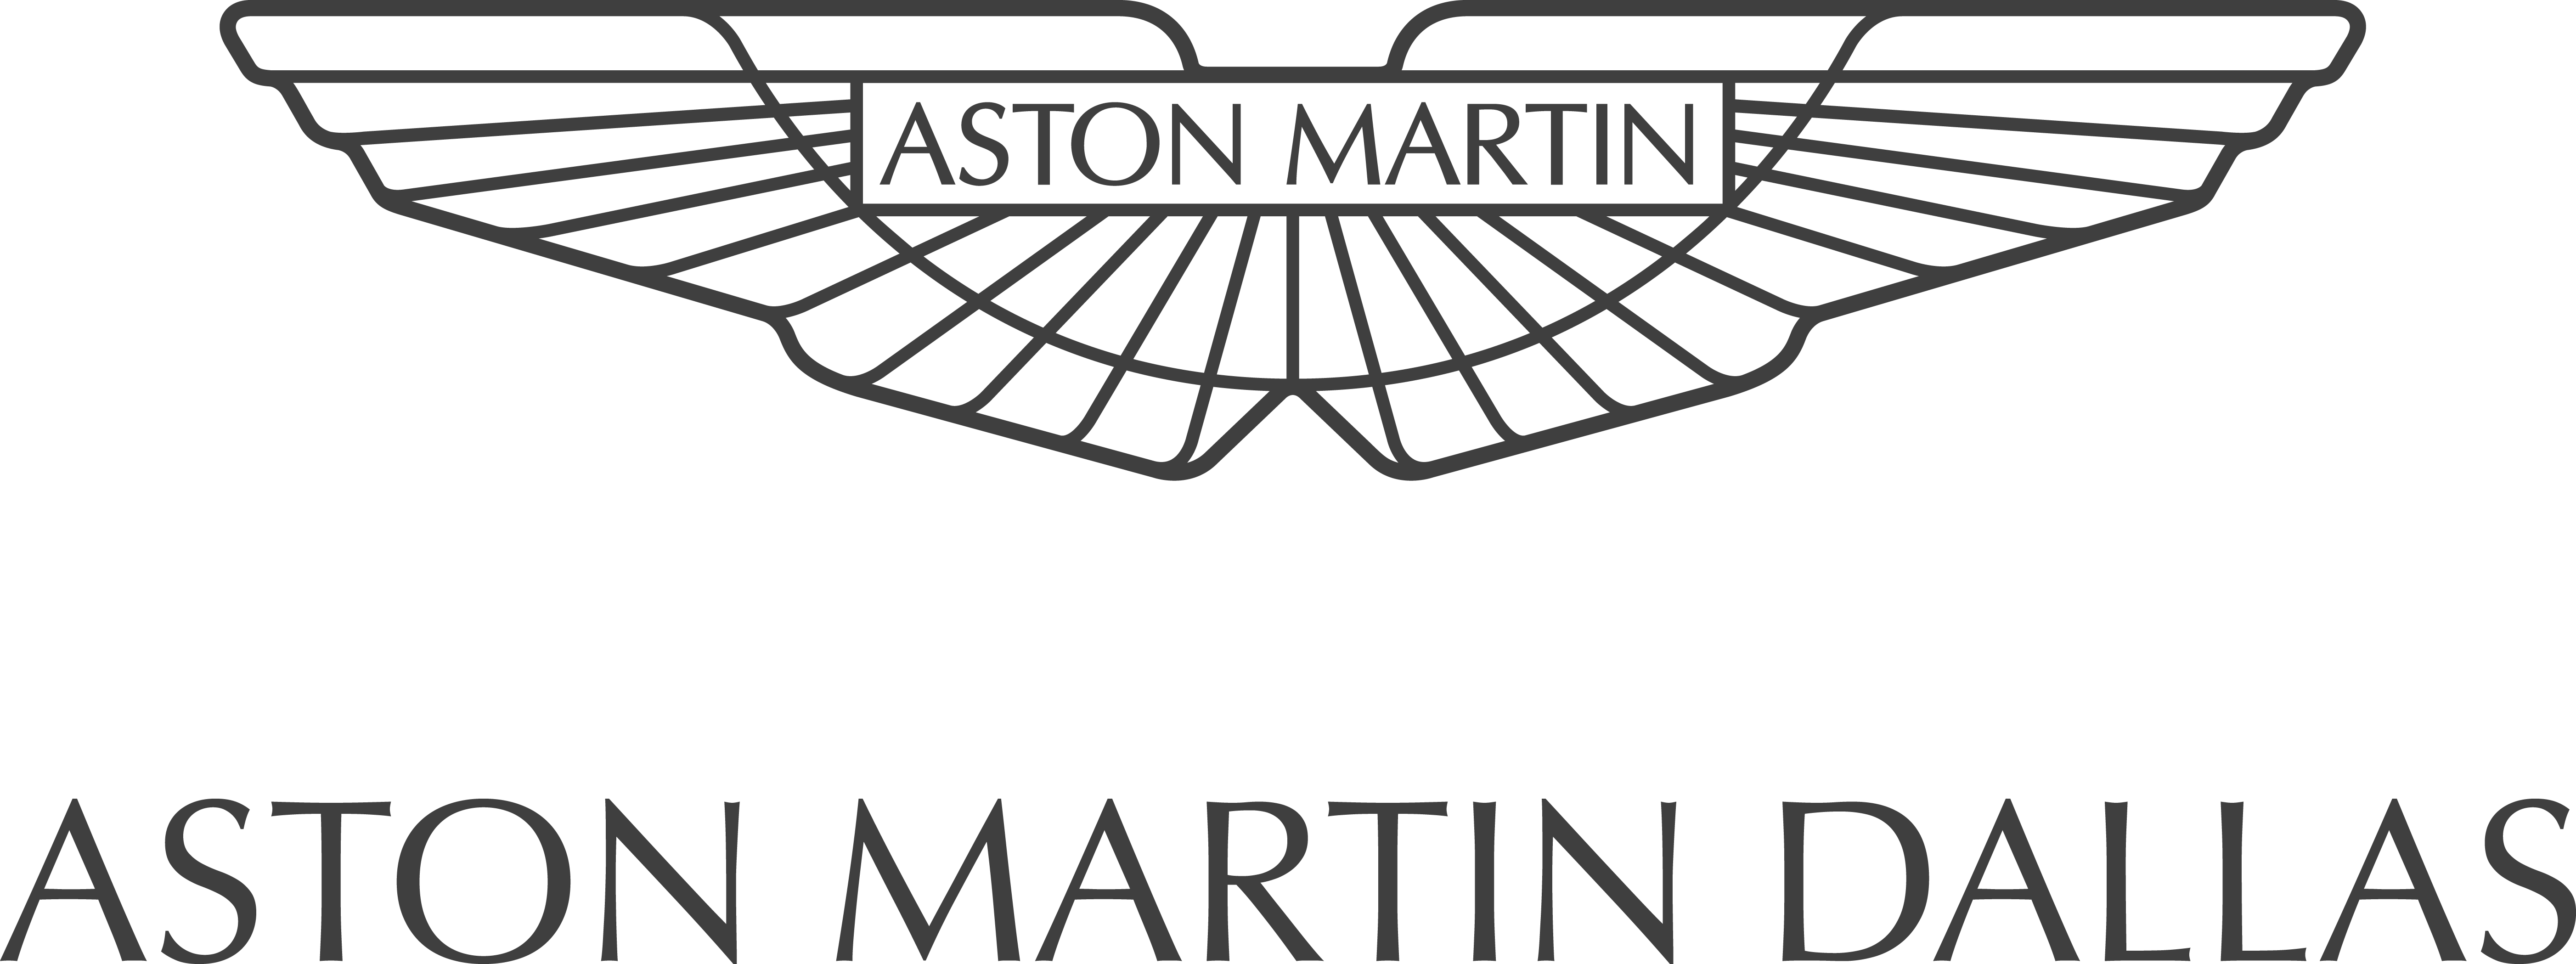 Aston Martin Of Dallas Logo - Aston Martin, Transparent background PNG HD thumbnail